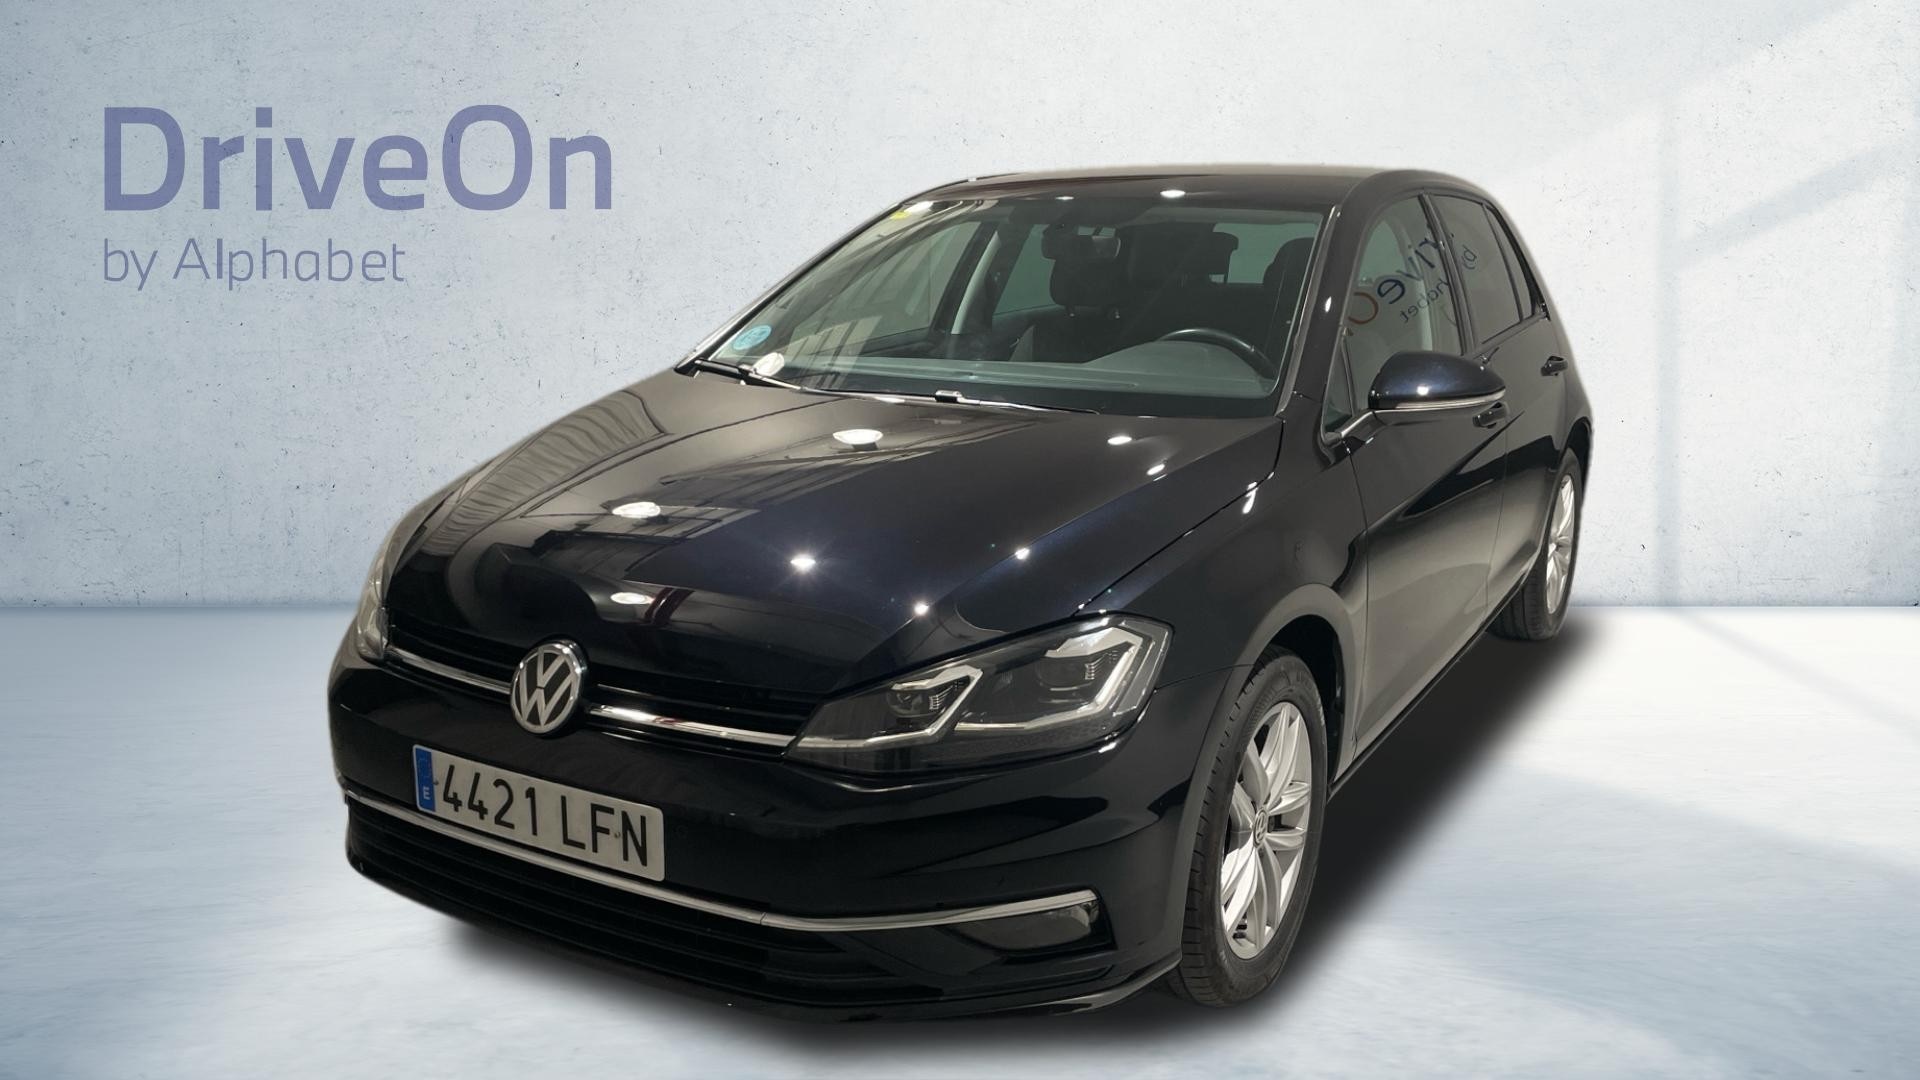 Volkswagen Golf Advance 1.6 TDI 85 kW (115 CV) Vehículo usado en Madrid - 1